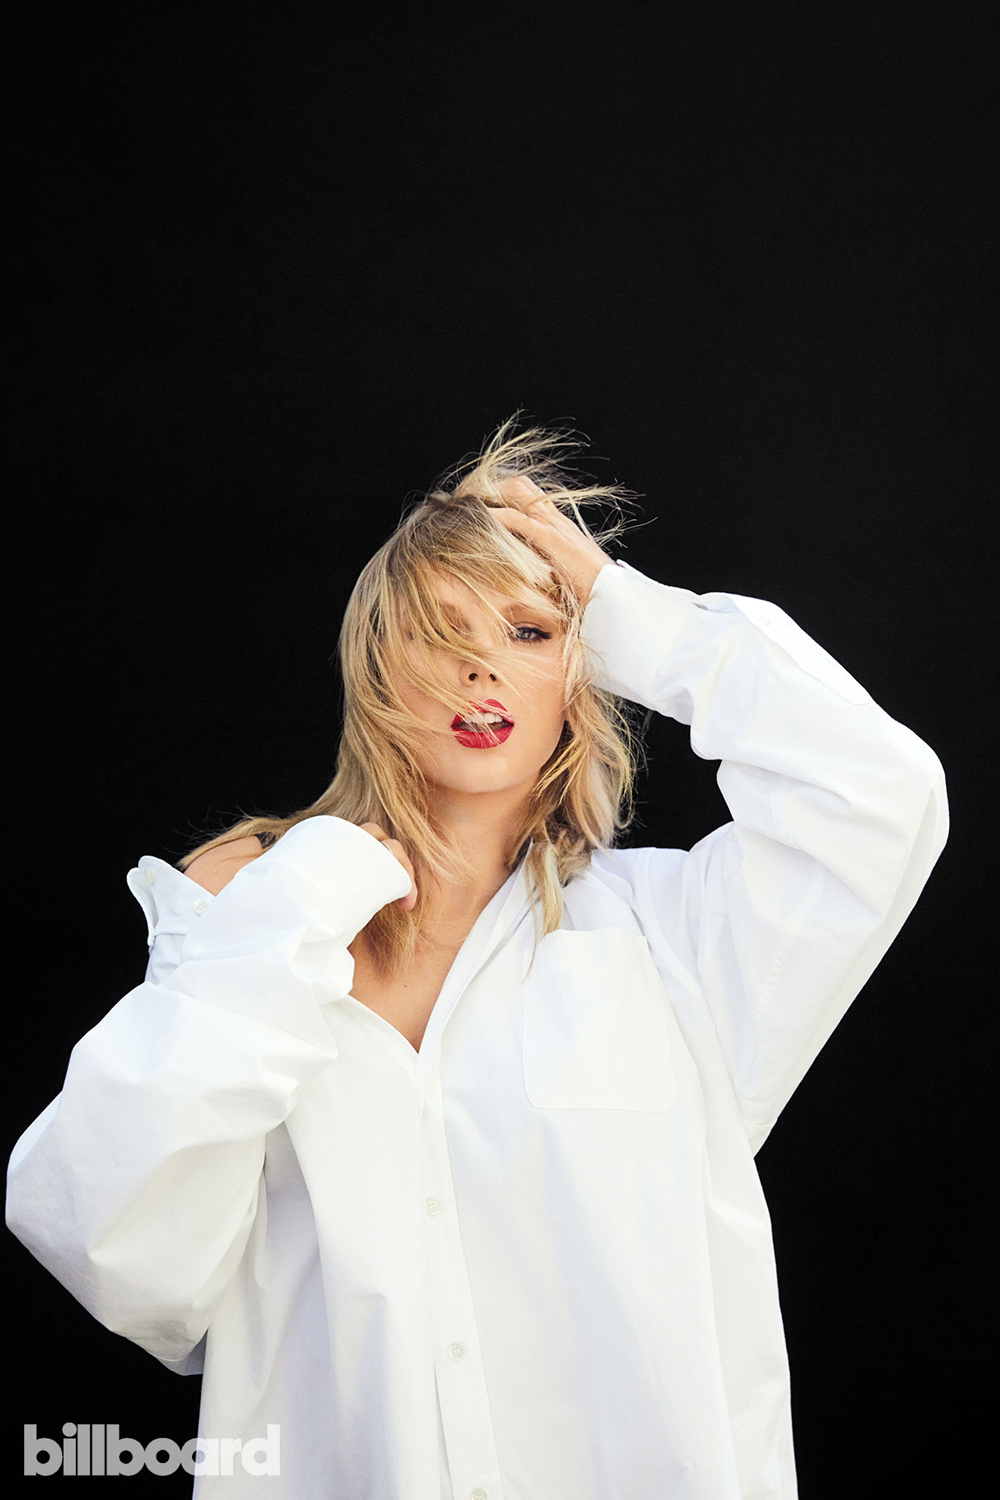 Wallpaper, Taylor Swift, women, singer, blonde, blue eyes, red lipstick, simple background, black background, white clothing, billboard 1000x1500